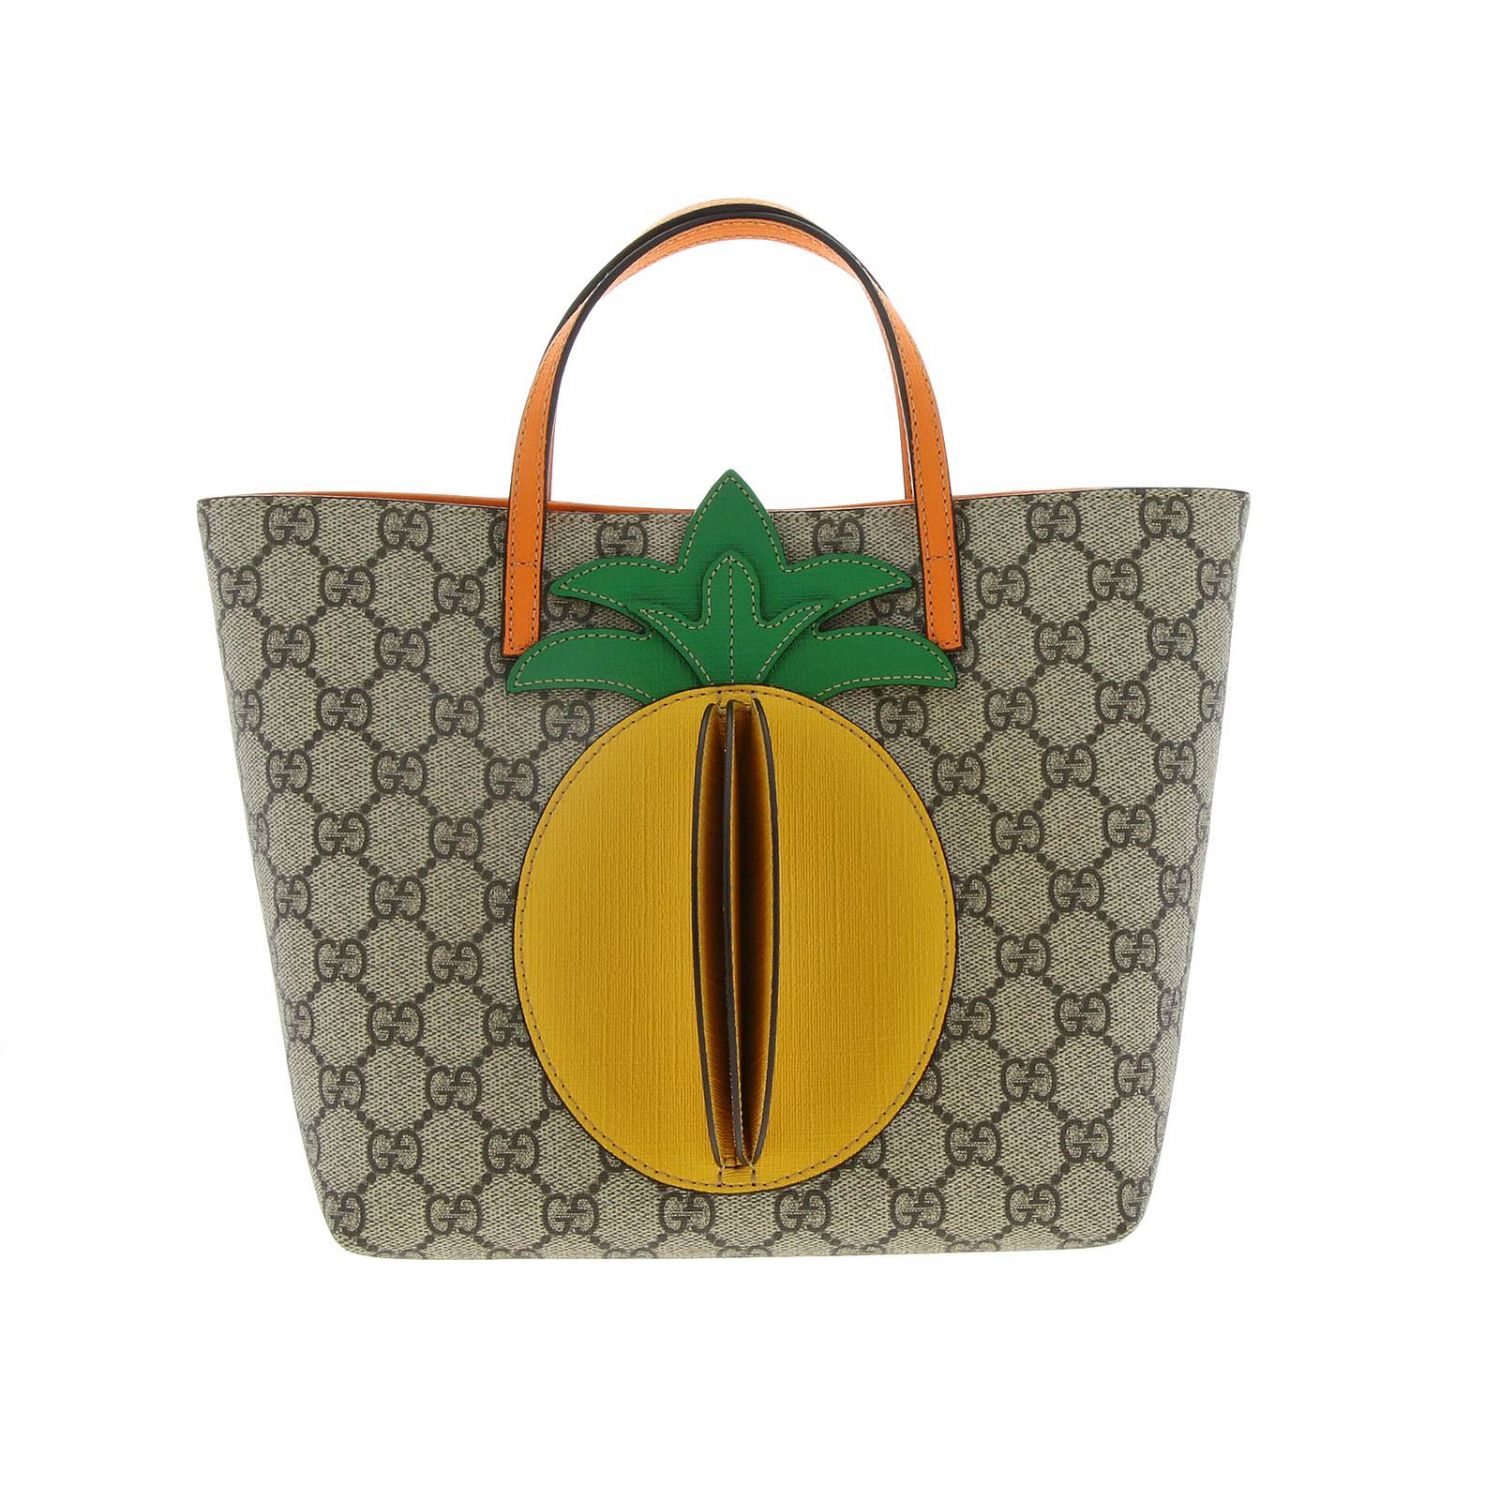 gucci pineapple bag